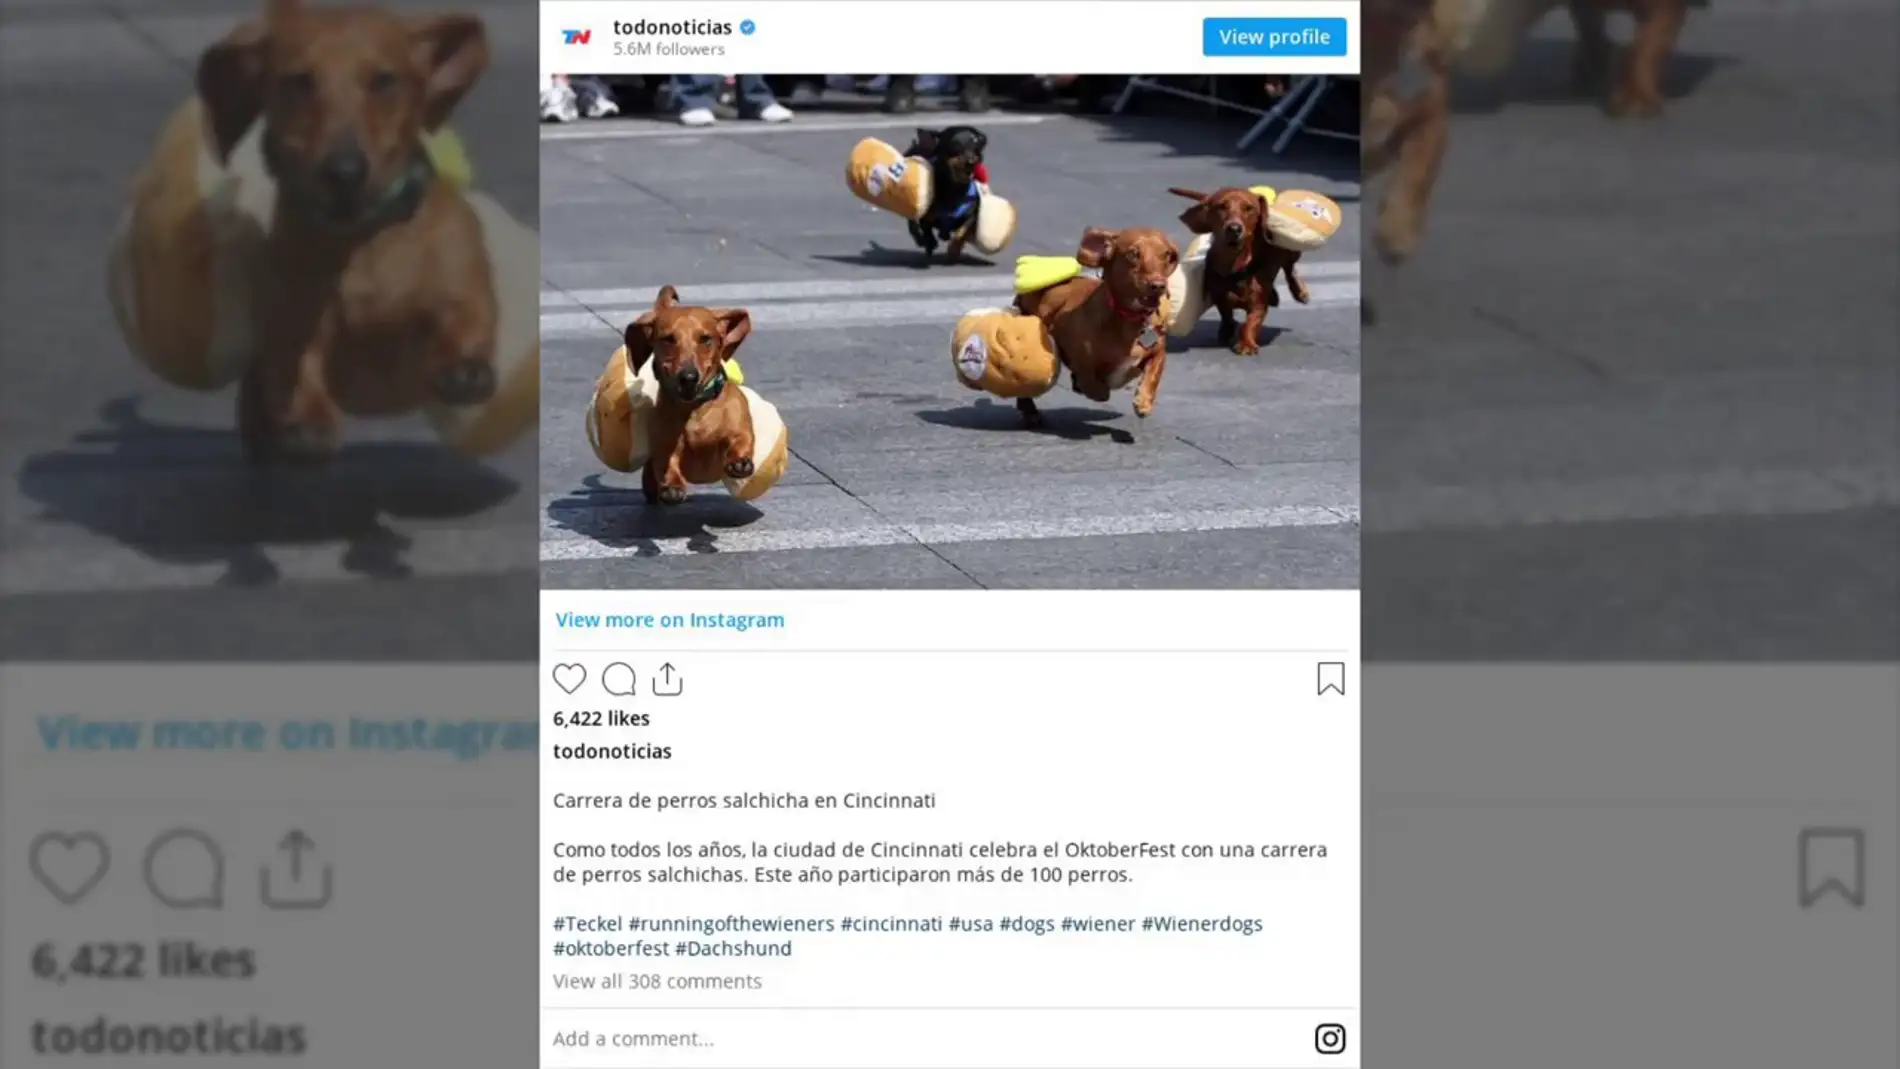 La peculiar carrera de "perros salchicha" de Cincinnati para celebrar el Oktoberfest